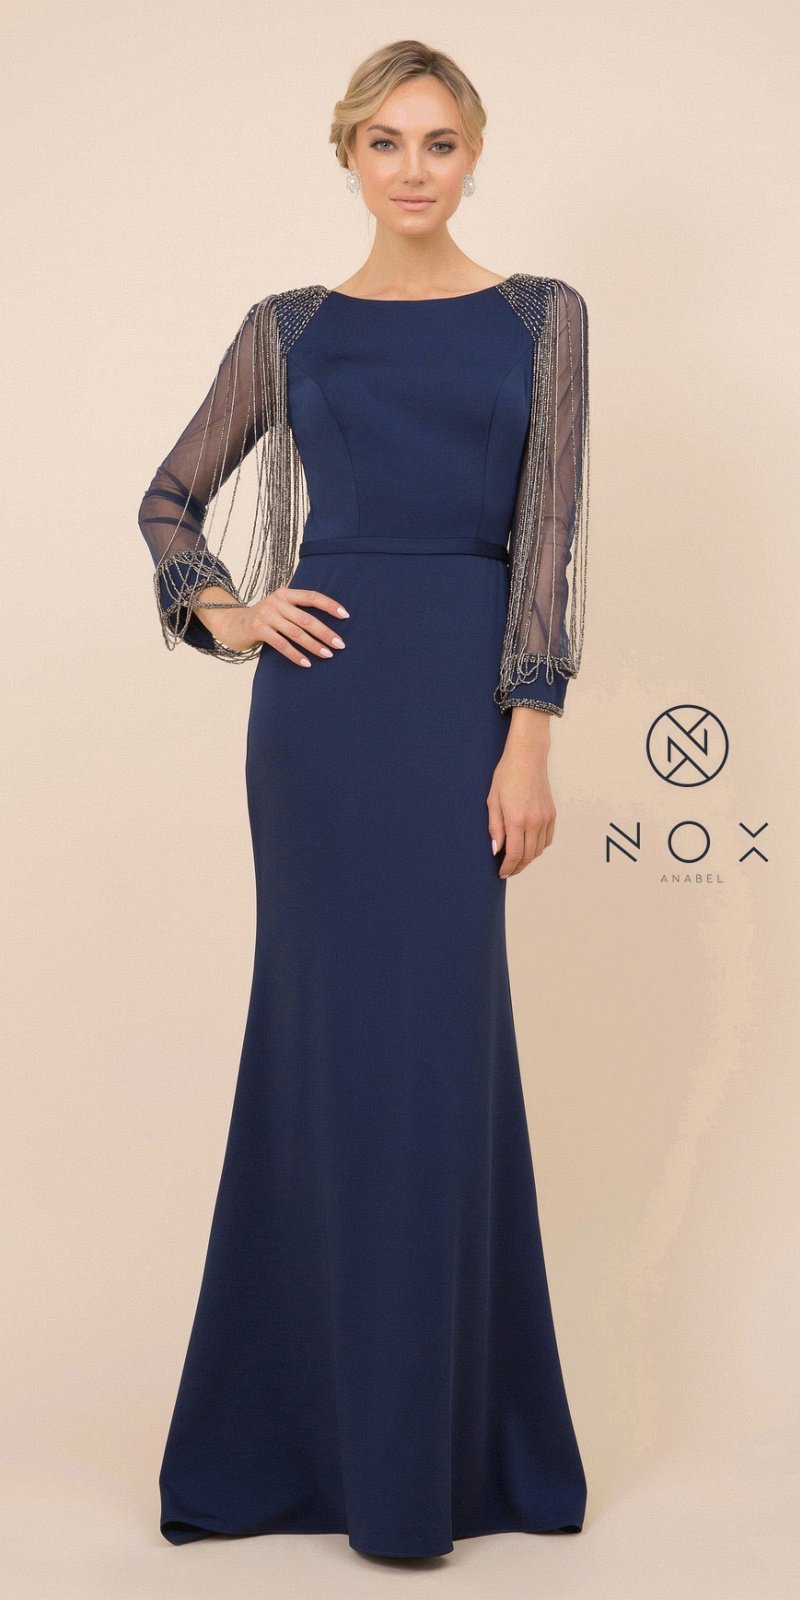 Nox Anabel Y410 Floor Length Evening Gown Navy Blue Fringe Beaded Long Sleeves